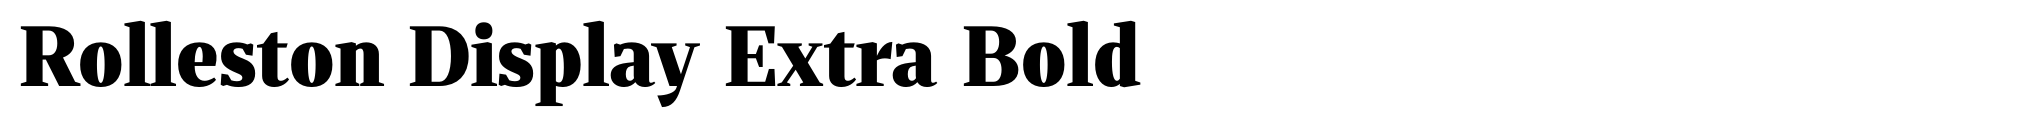 Rolleston Display Extra Bold image